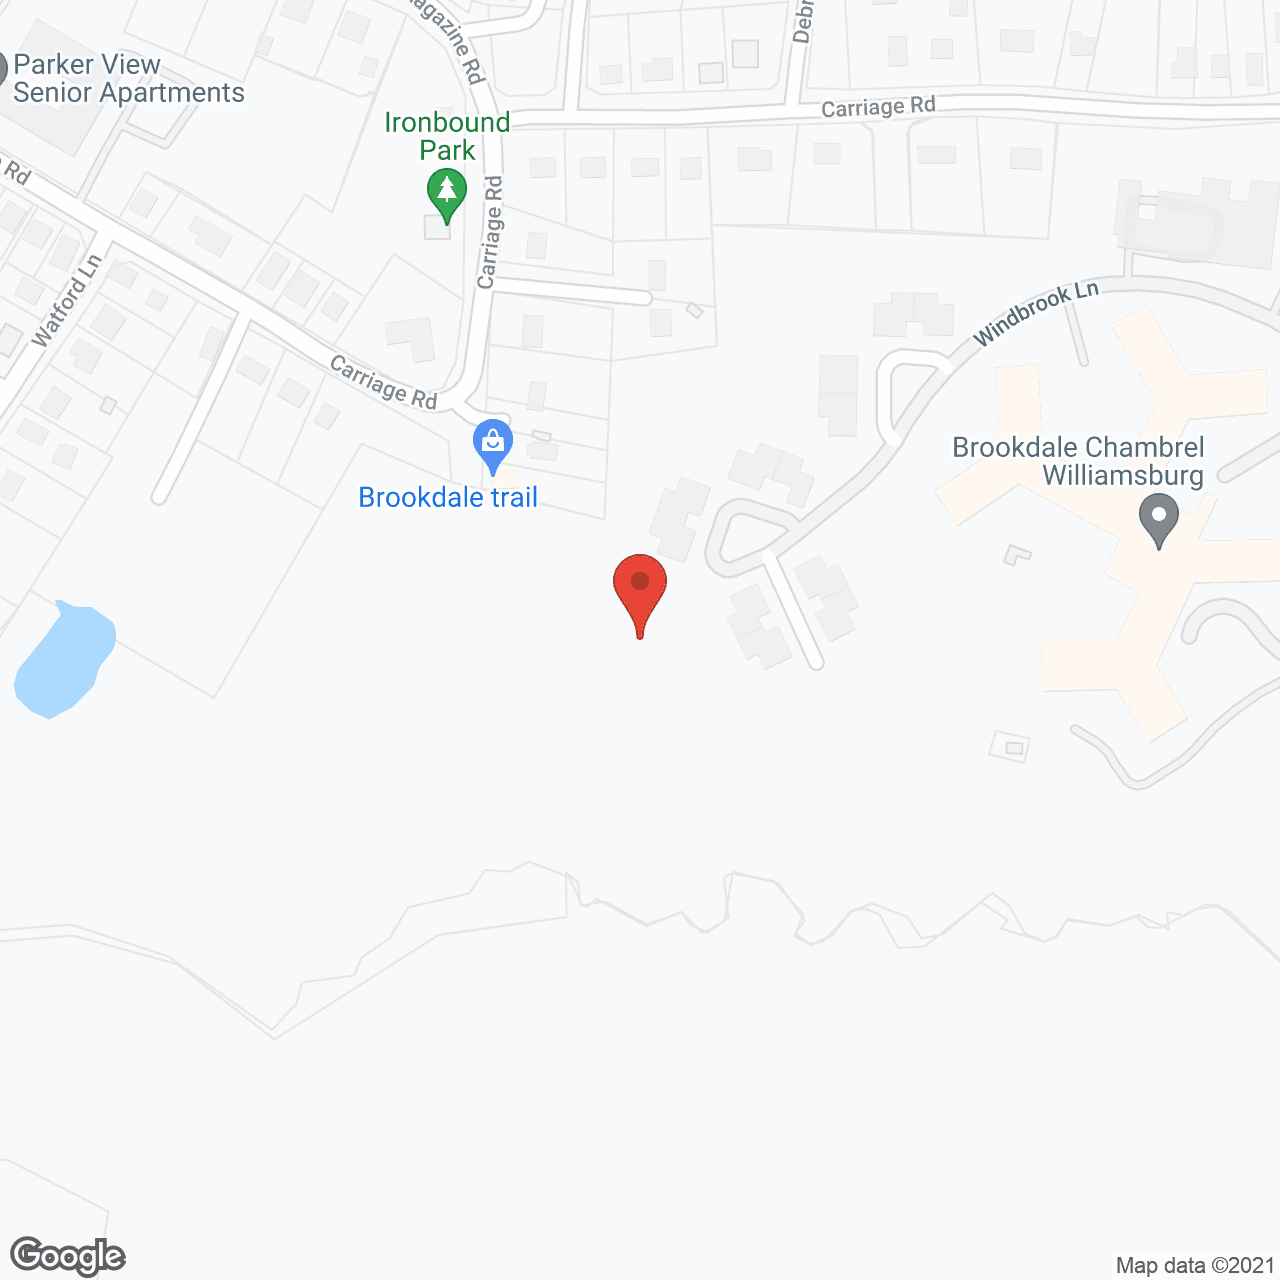 Brookdale Chambrel Williamsburg in google map